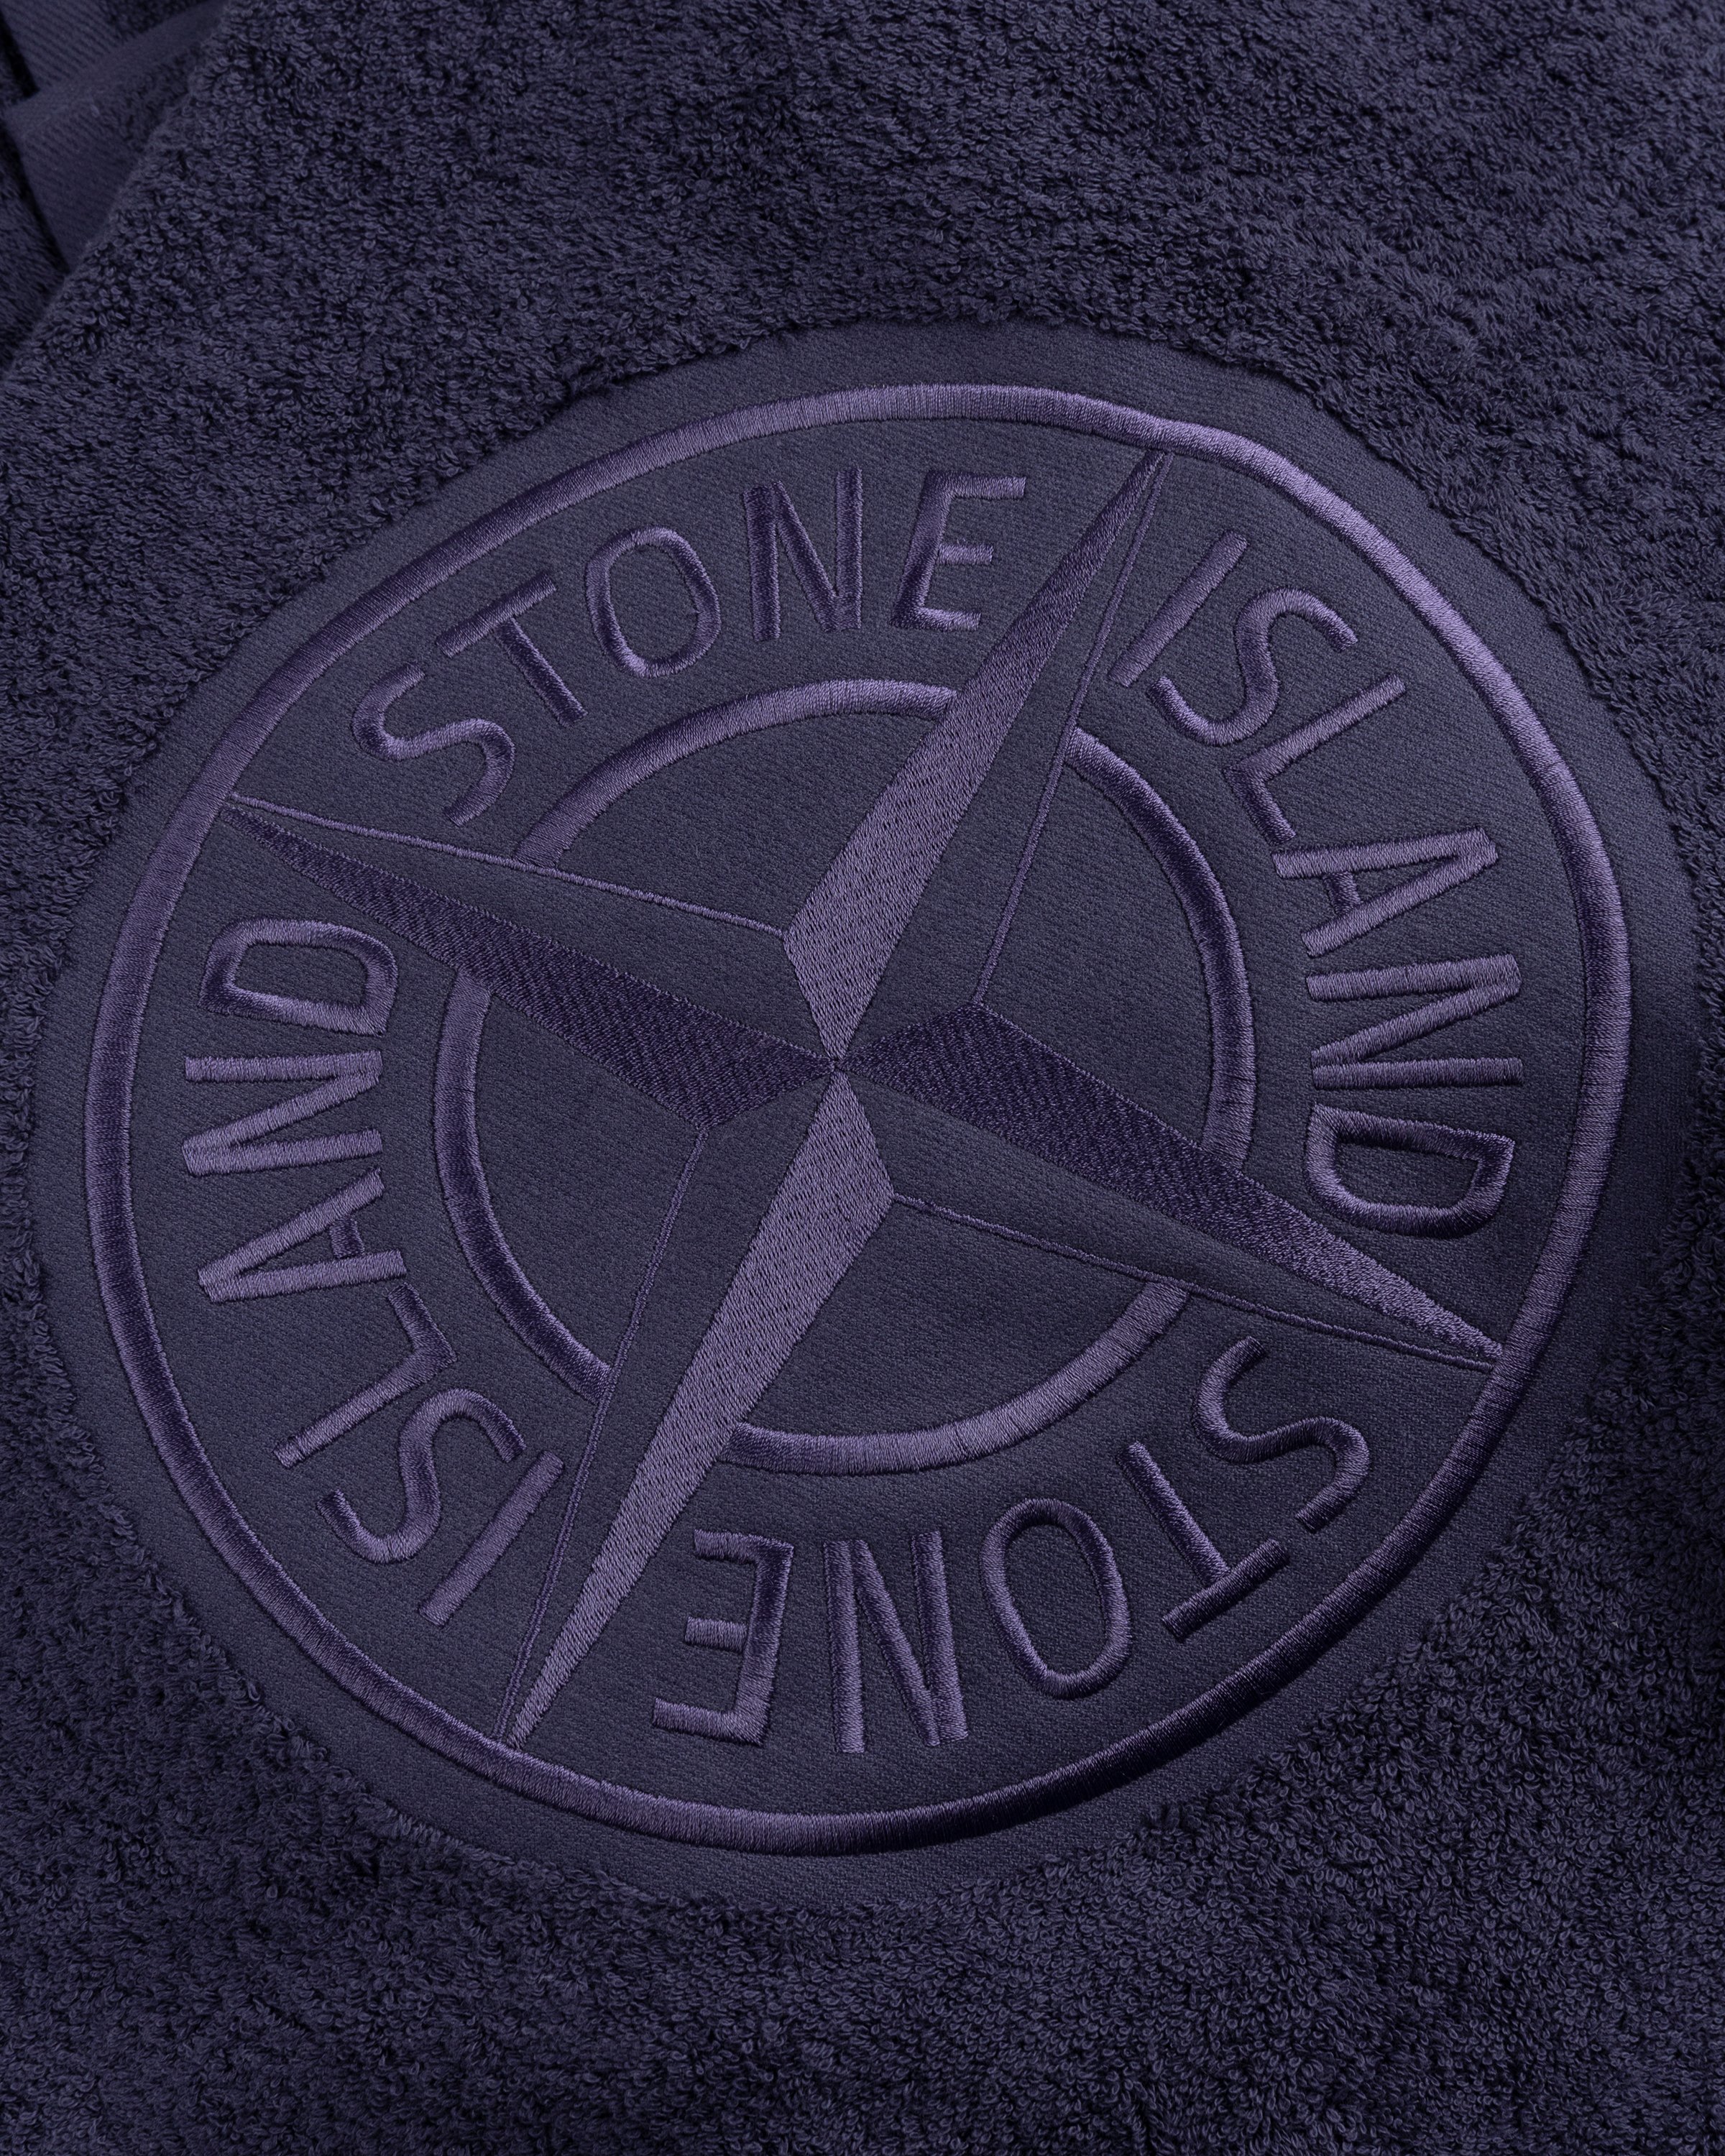 Stone Island - 93466 Logo Beach Towel With Nylon Bag Royal - Lifestyle - Blue - Image 7